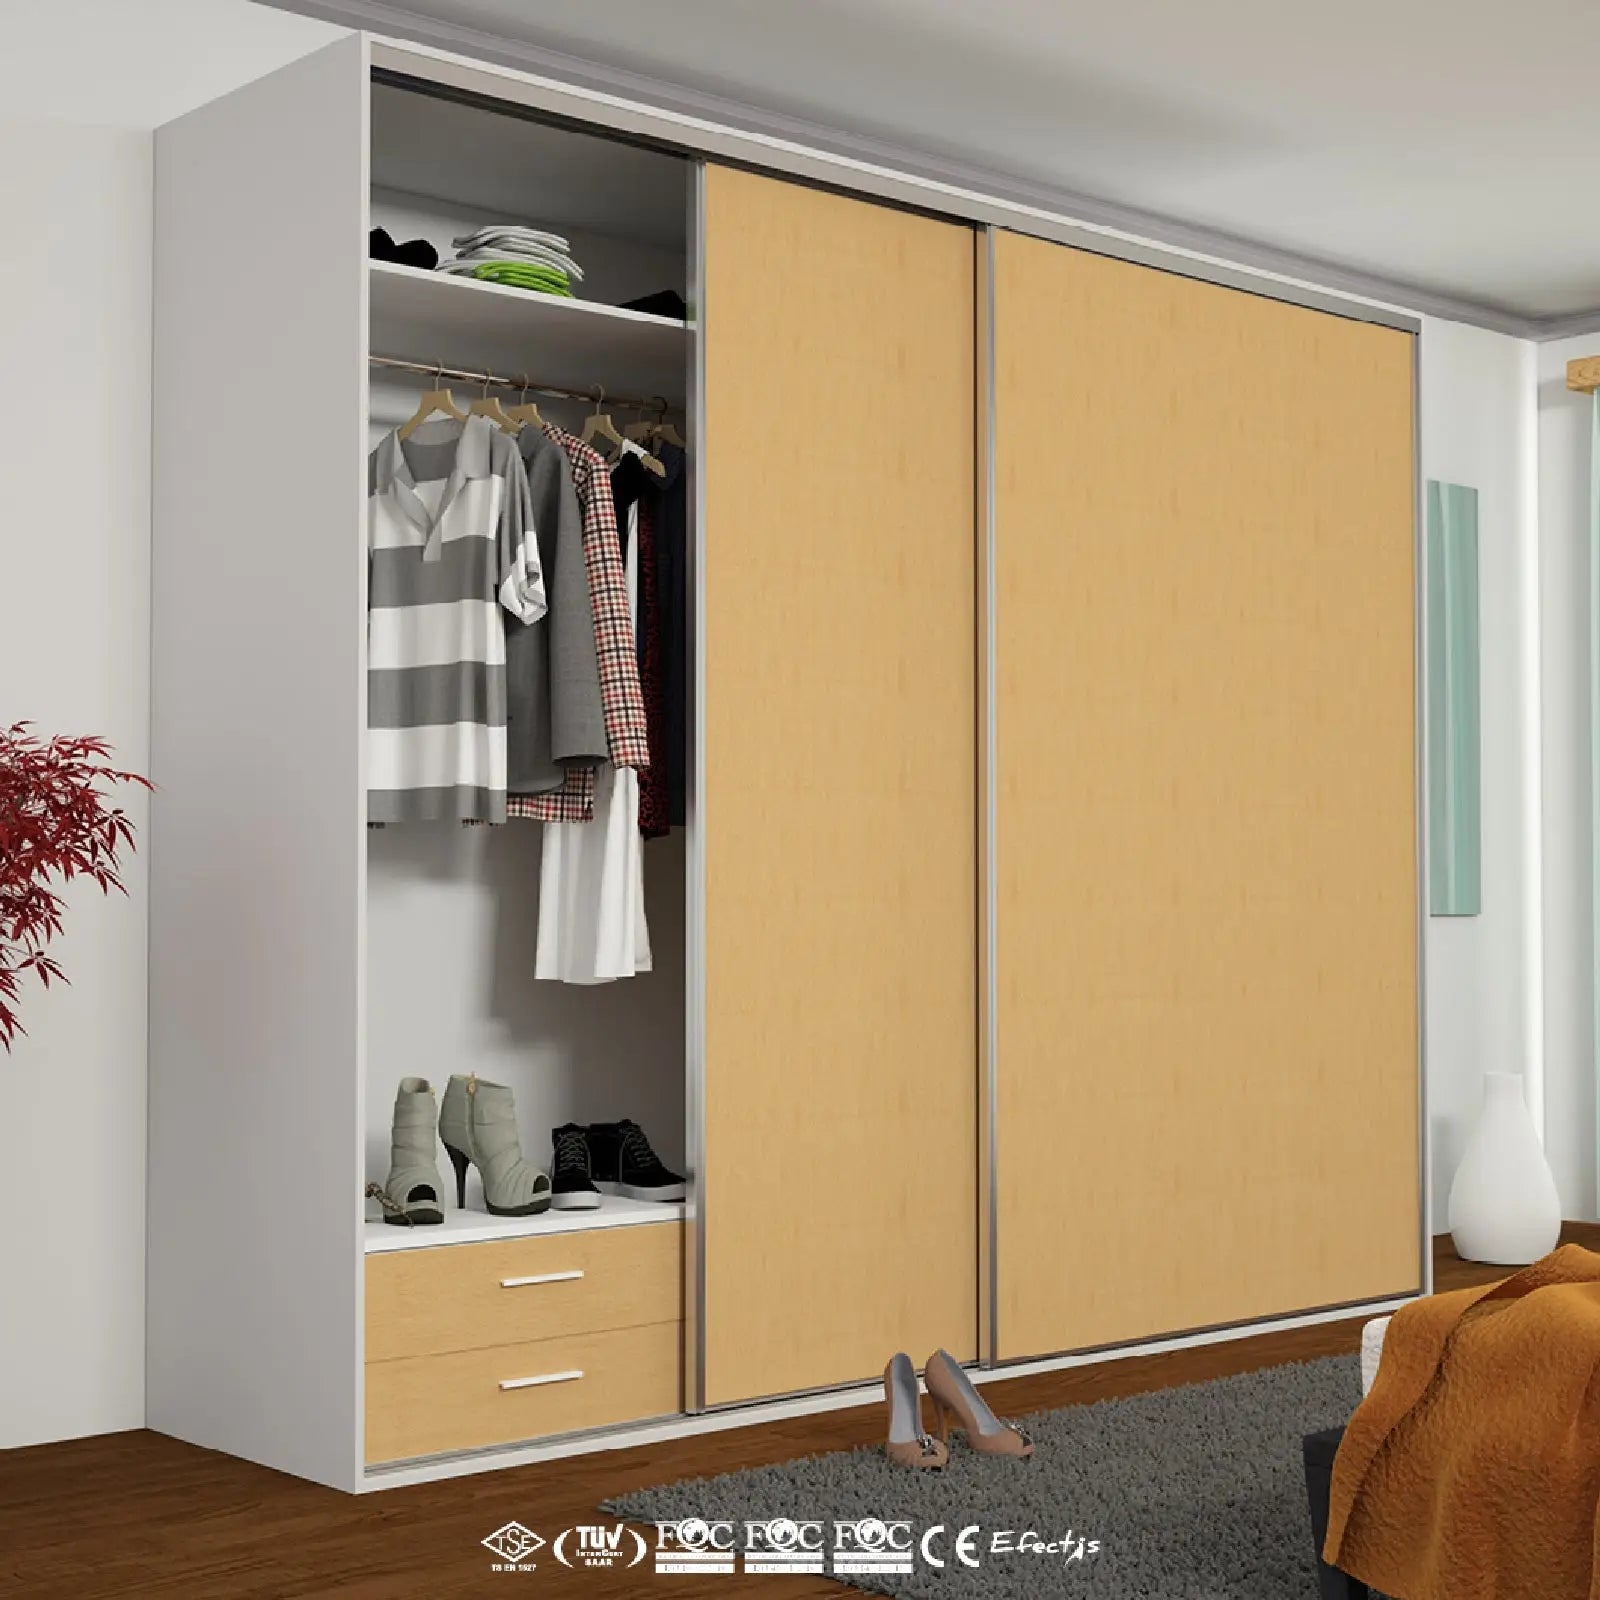 PS-Slide Sliding Door Wardrobe System - 4 Door - 3600mm Track - Both Way Soft Close - Decor And Decor